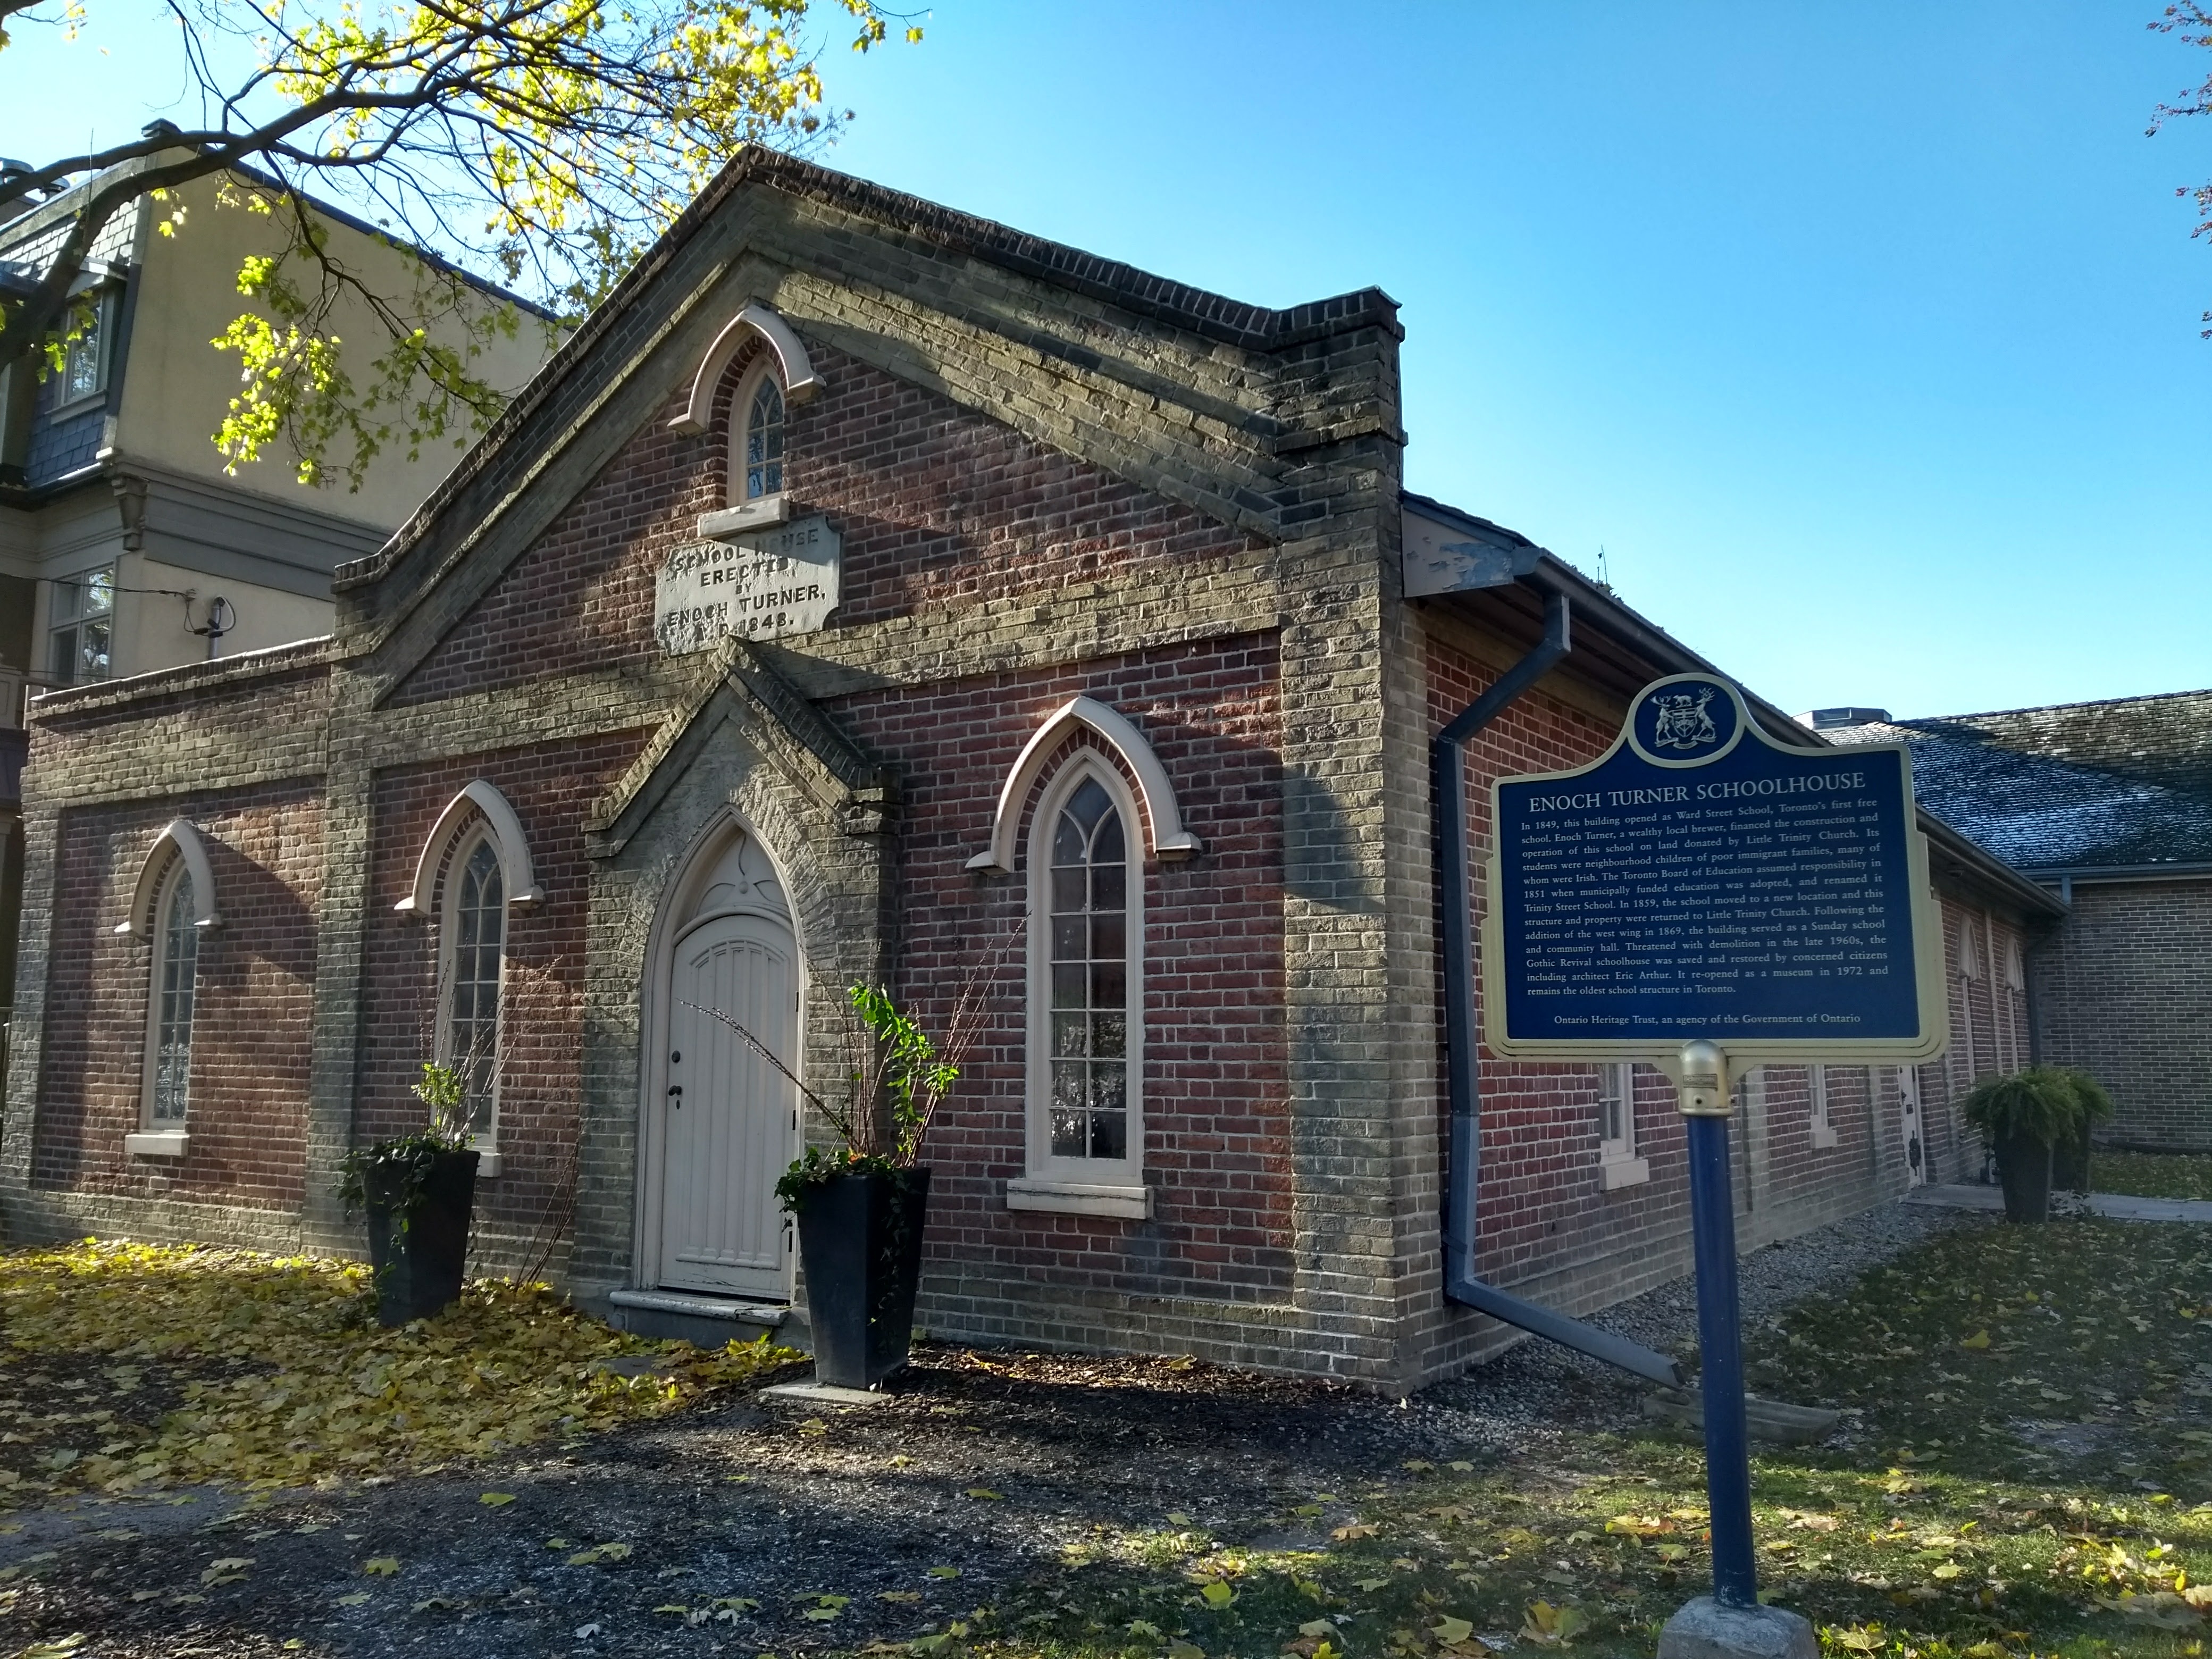 Enoch Turner Schoolhouse, an old schoolhouse built in 1849